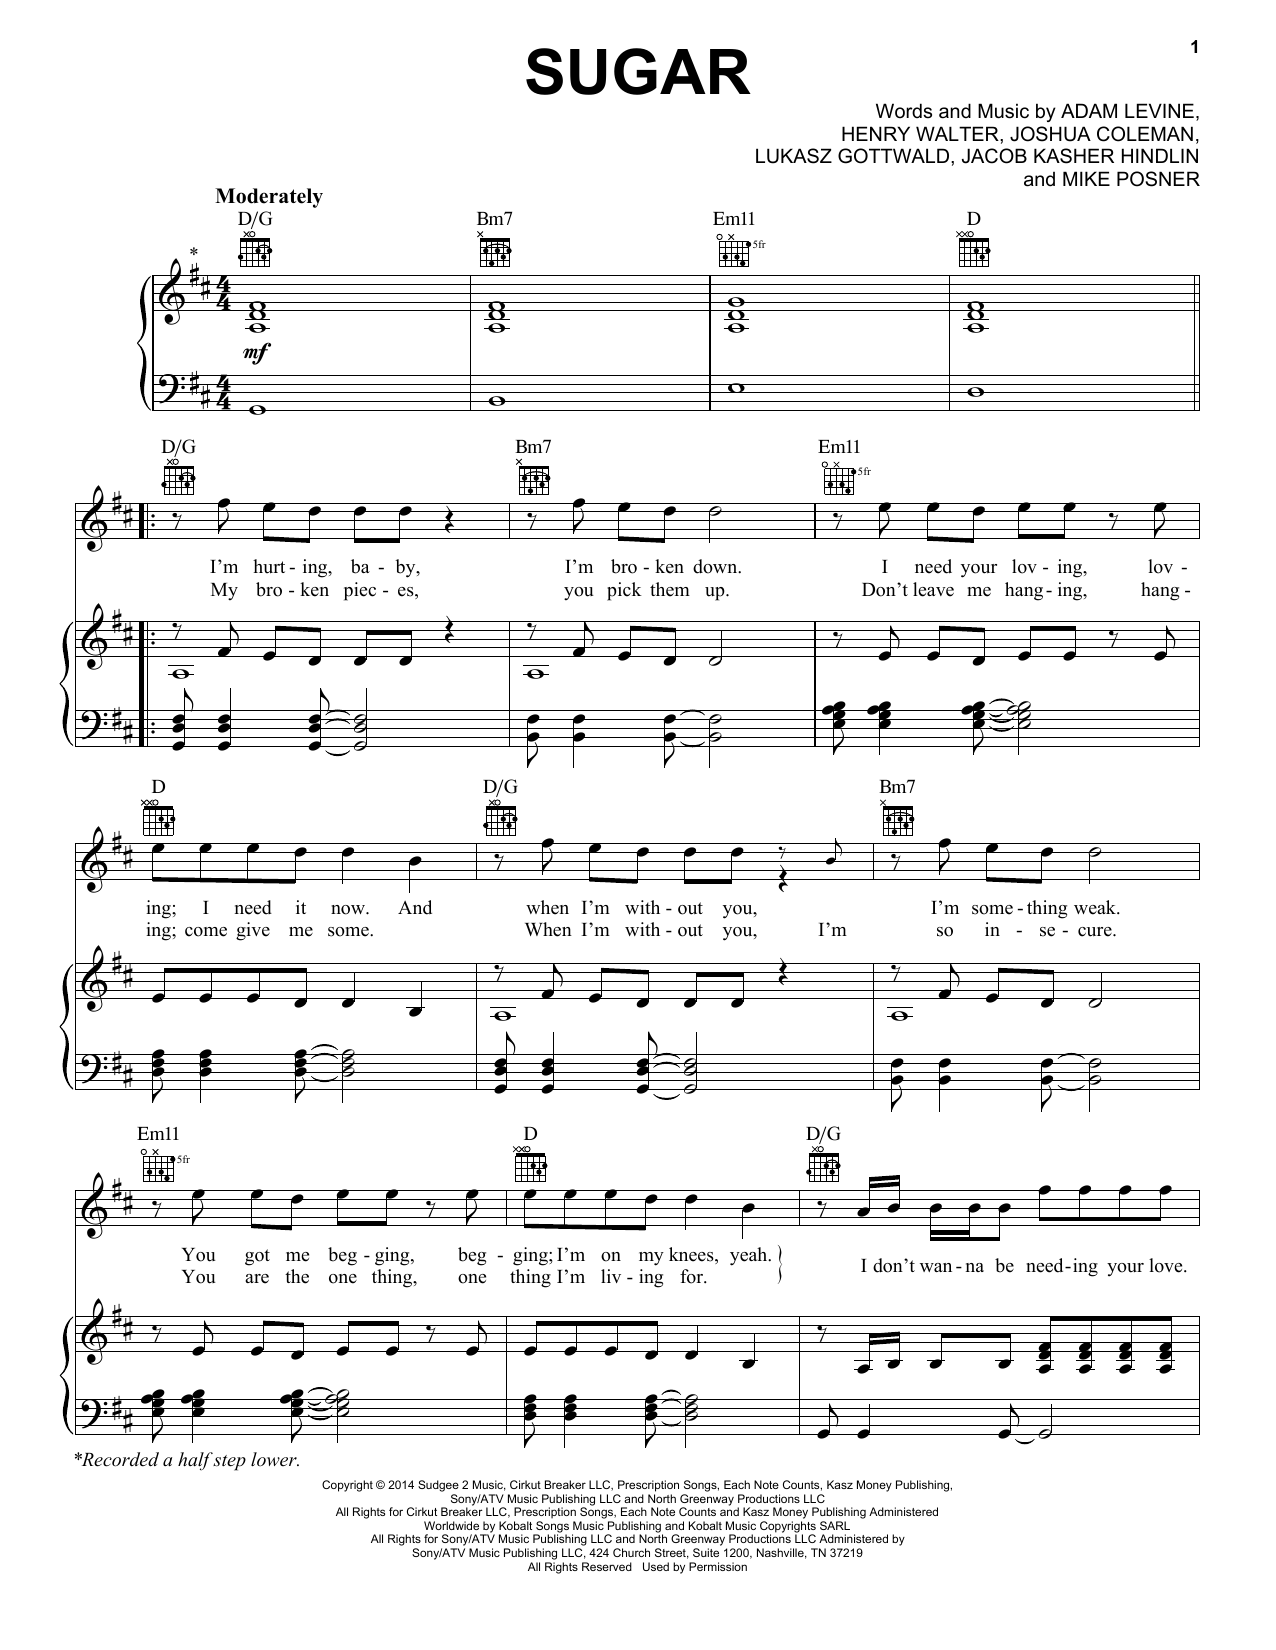 Maroon 5 Sugar Sheet Music Notes & Chords for Easy Guitar Tab - Download or Print PDF